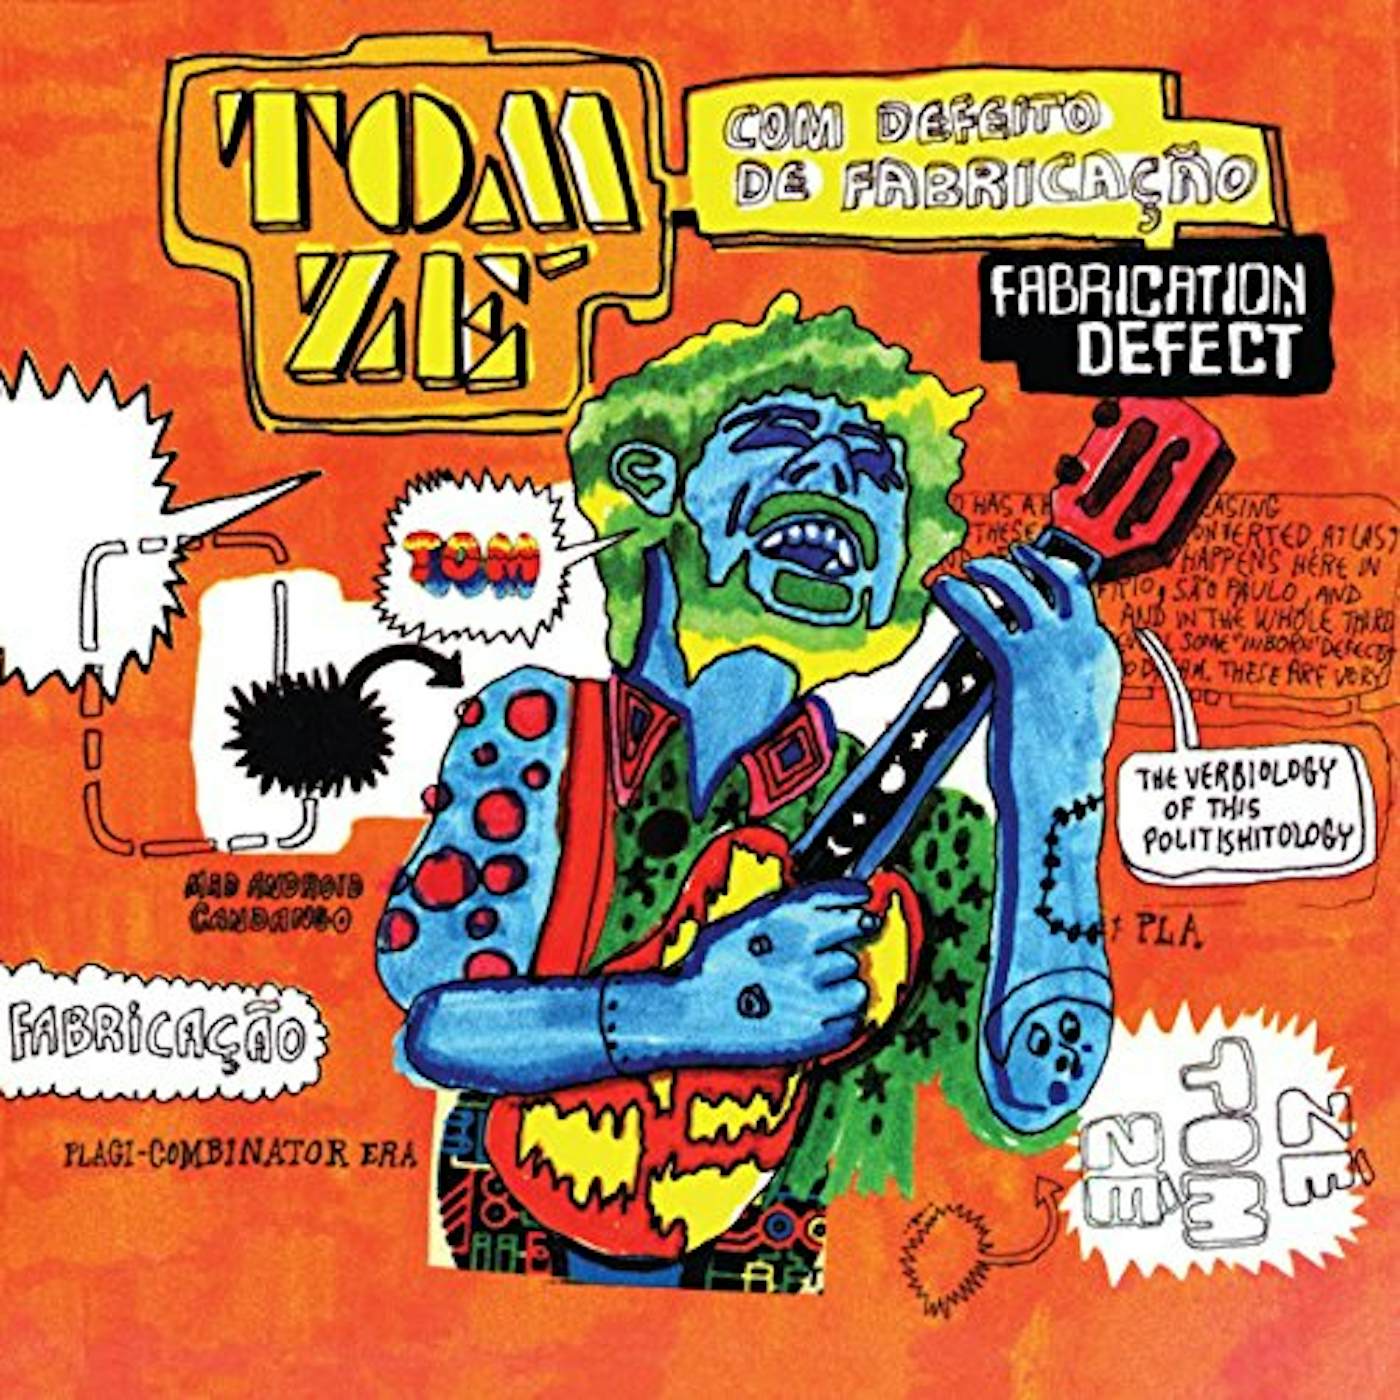 Tom Zé FABRICATION DEFECT Vinyl Record